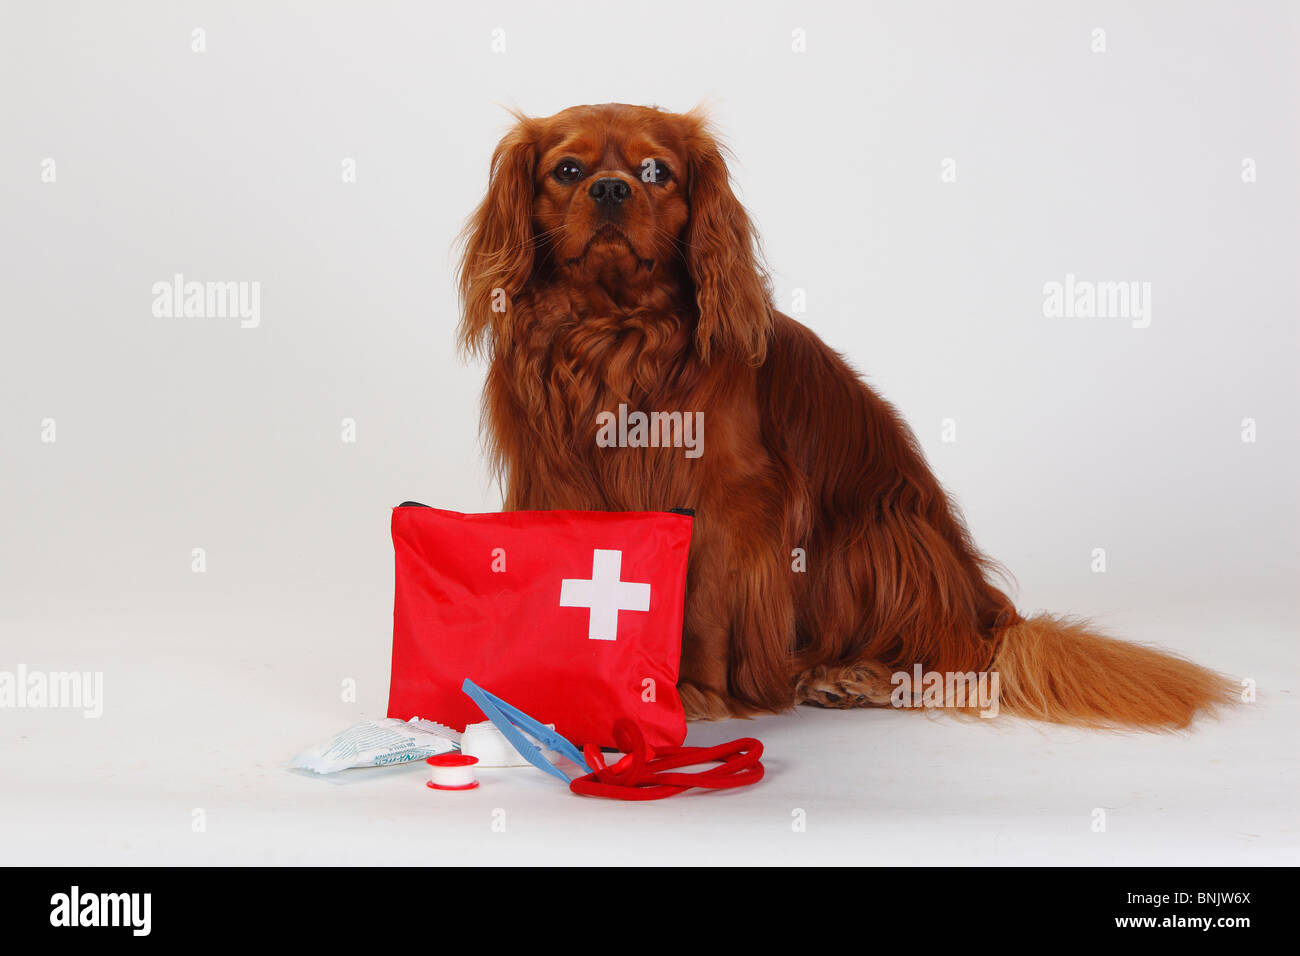 Cavalier King Charles Spaniel, rubino, con kit di primo soccorso per cani Foto Stock